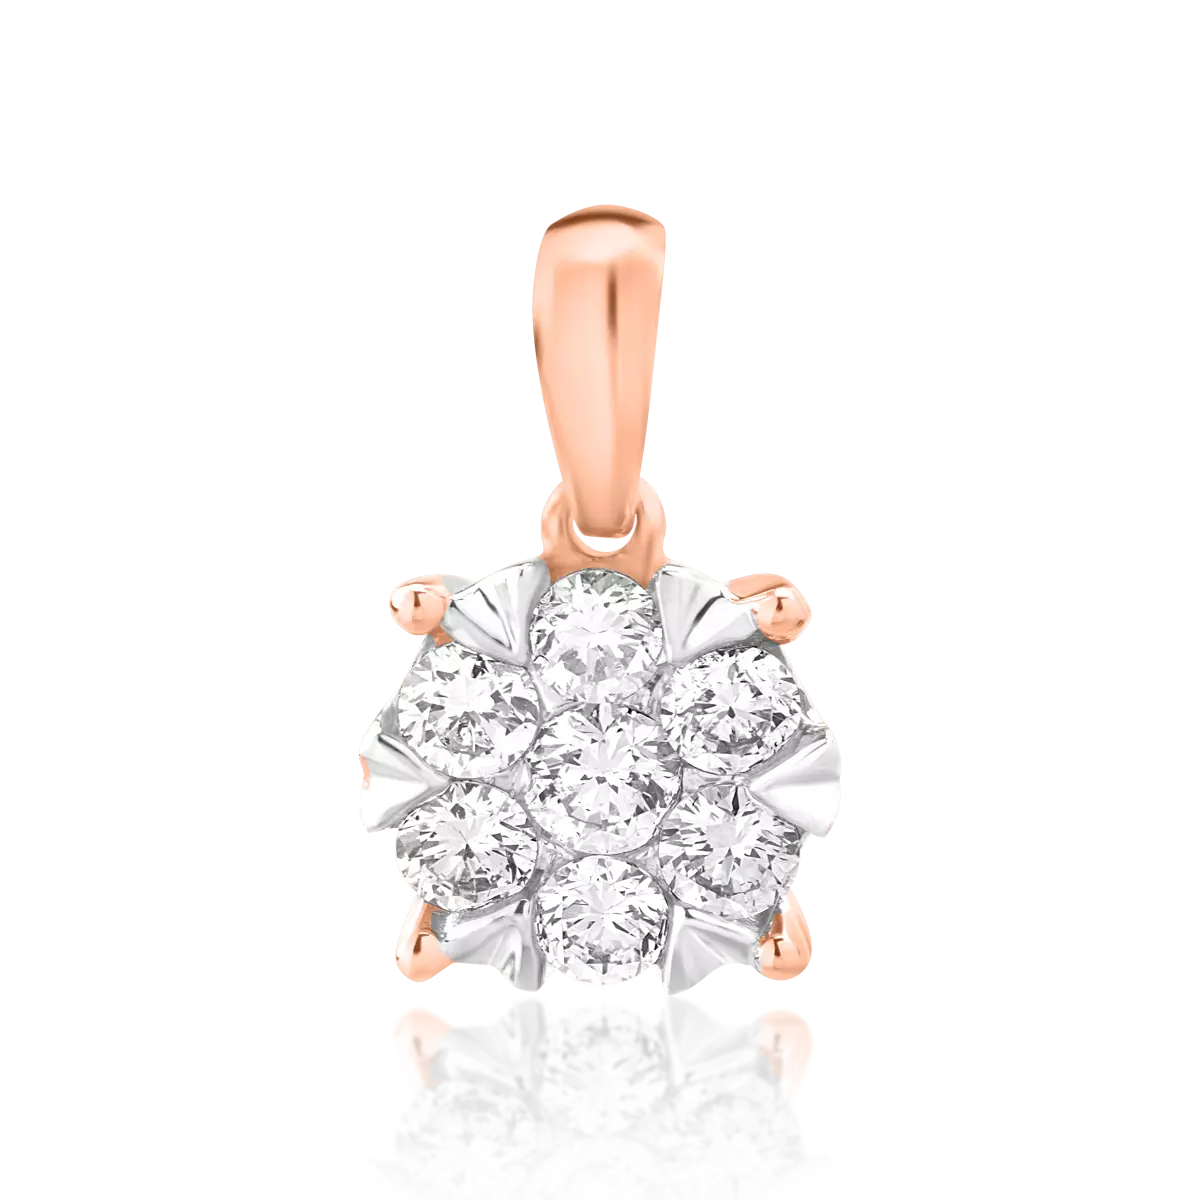 18K white-rose gold pendant with 0.25ct diamonds